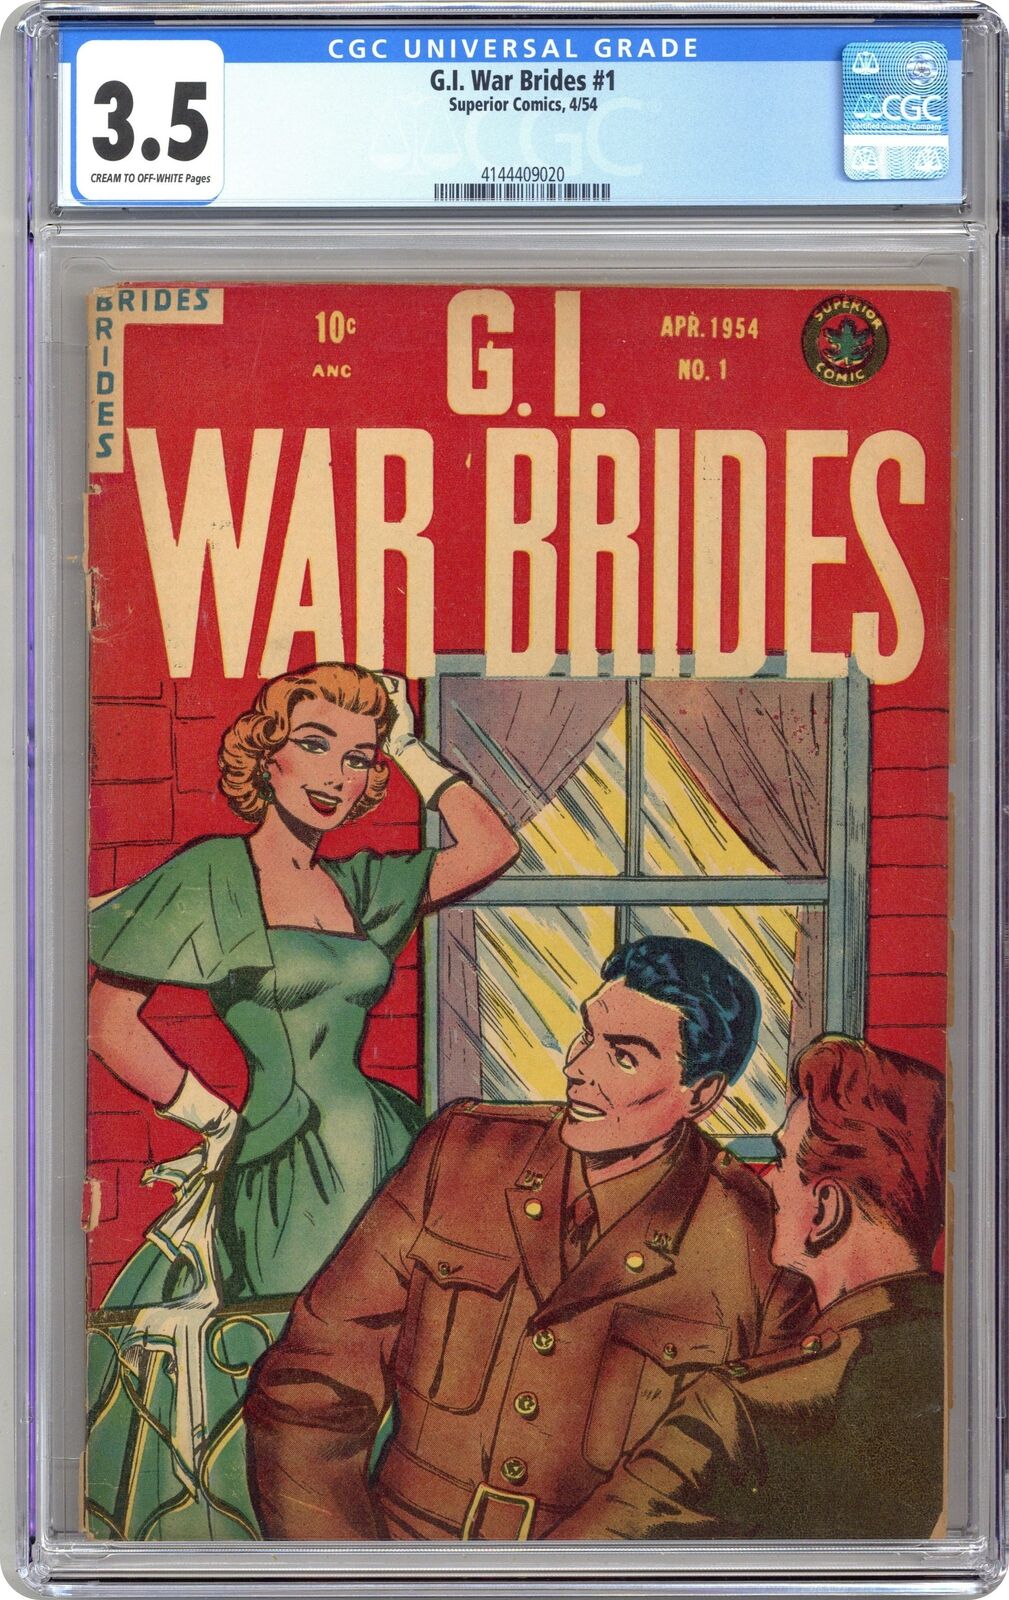 GI War Brides #1 CGC 3.5 1954 4144409020